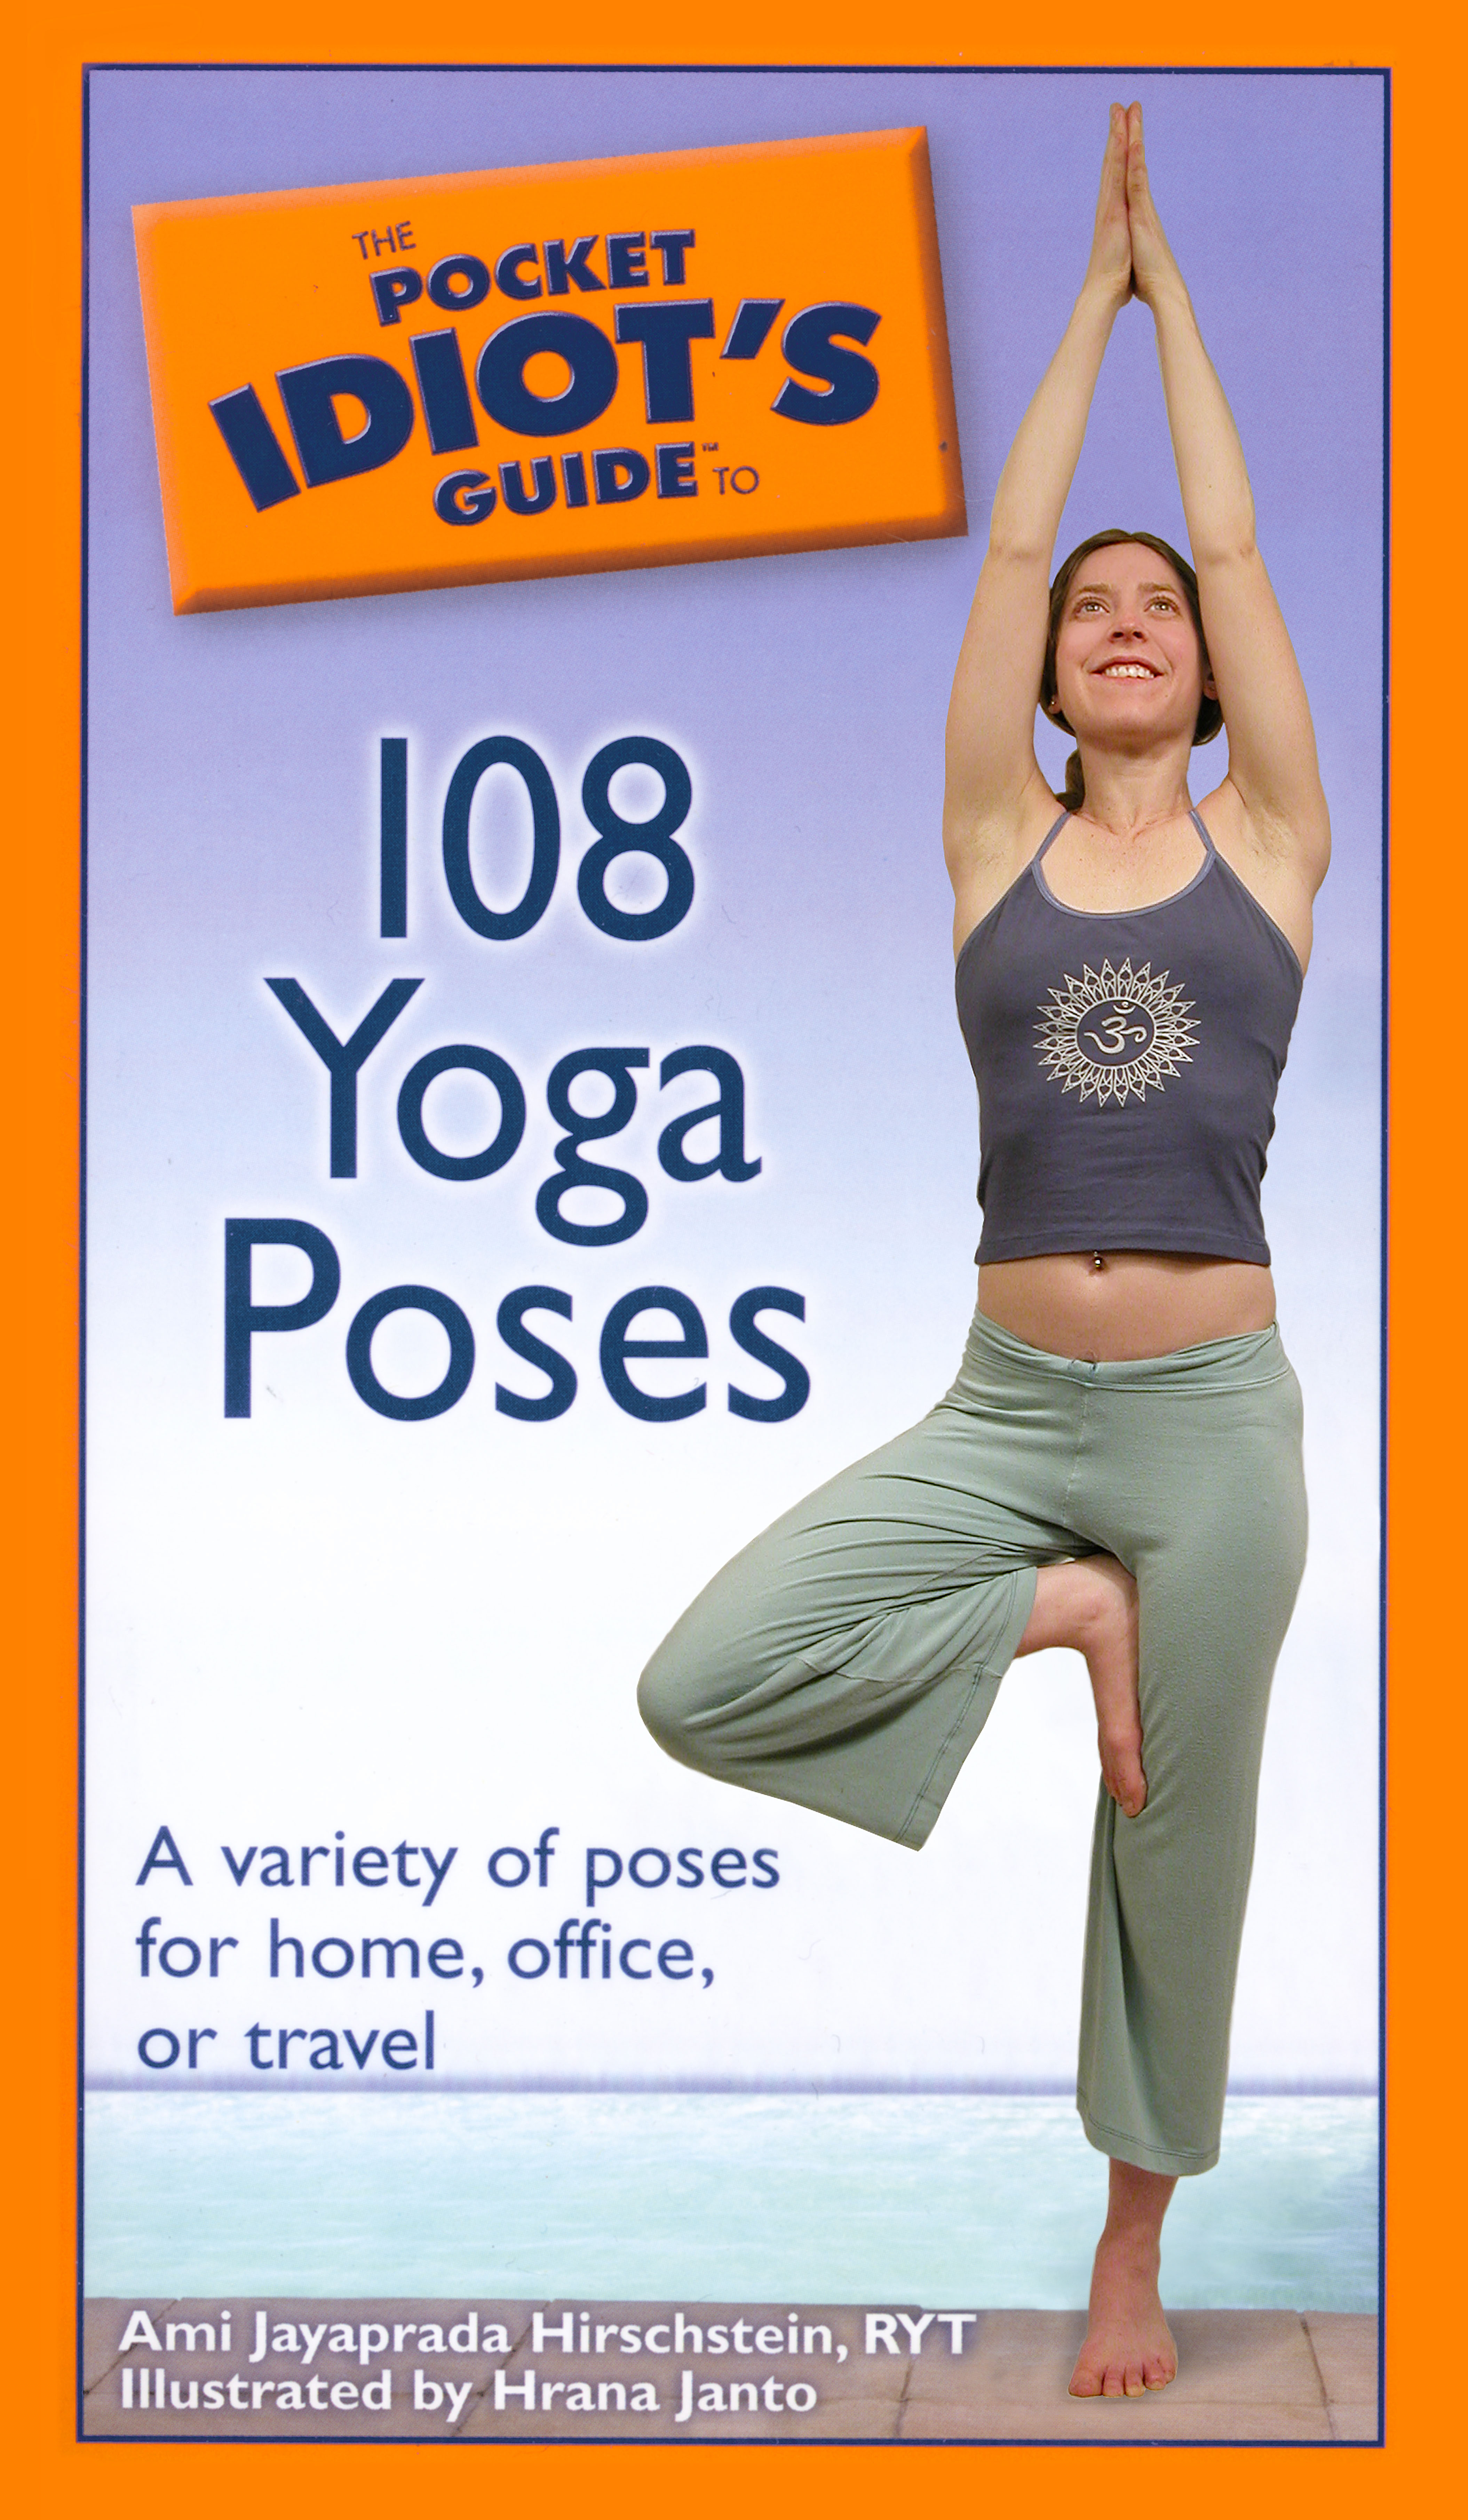 http://www.hranajanto.com/pgfx/108-yoga-cover-ami-big.jpg